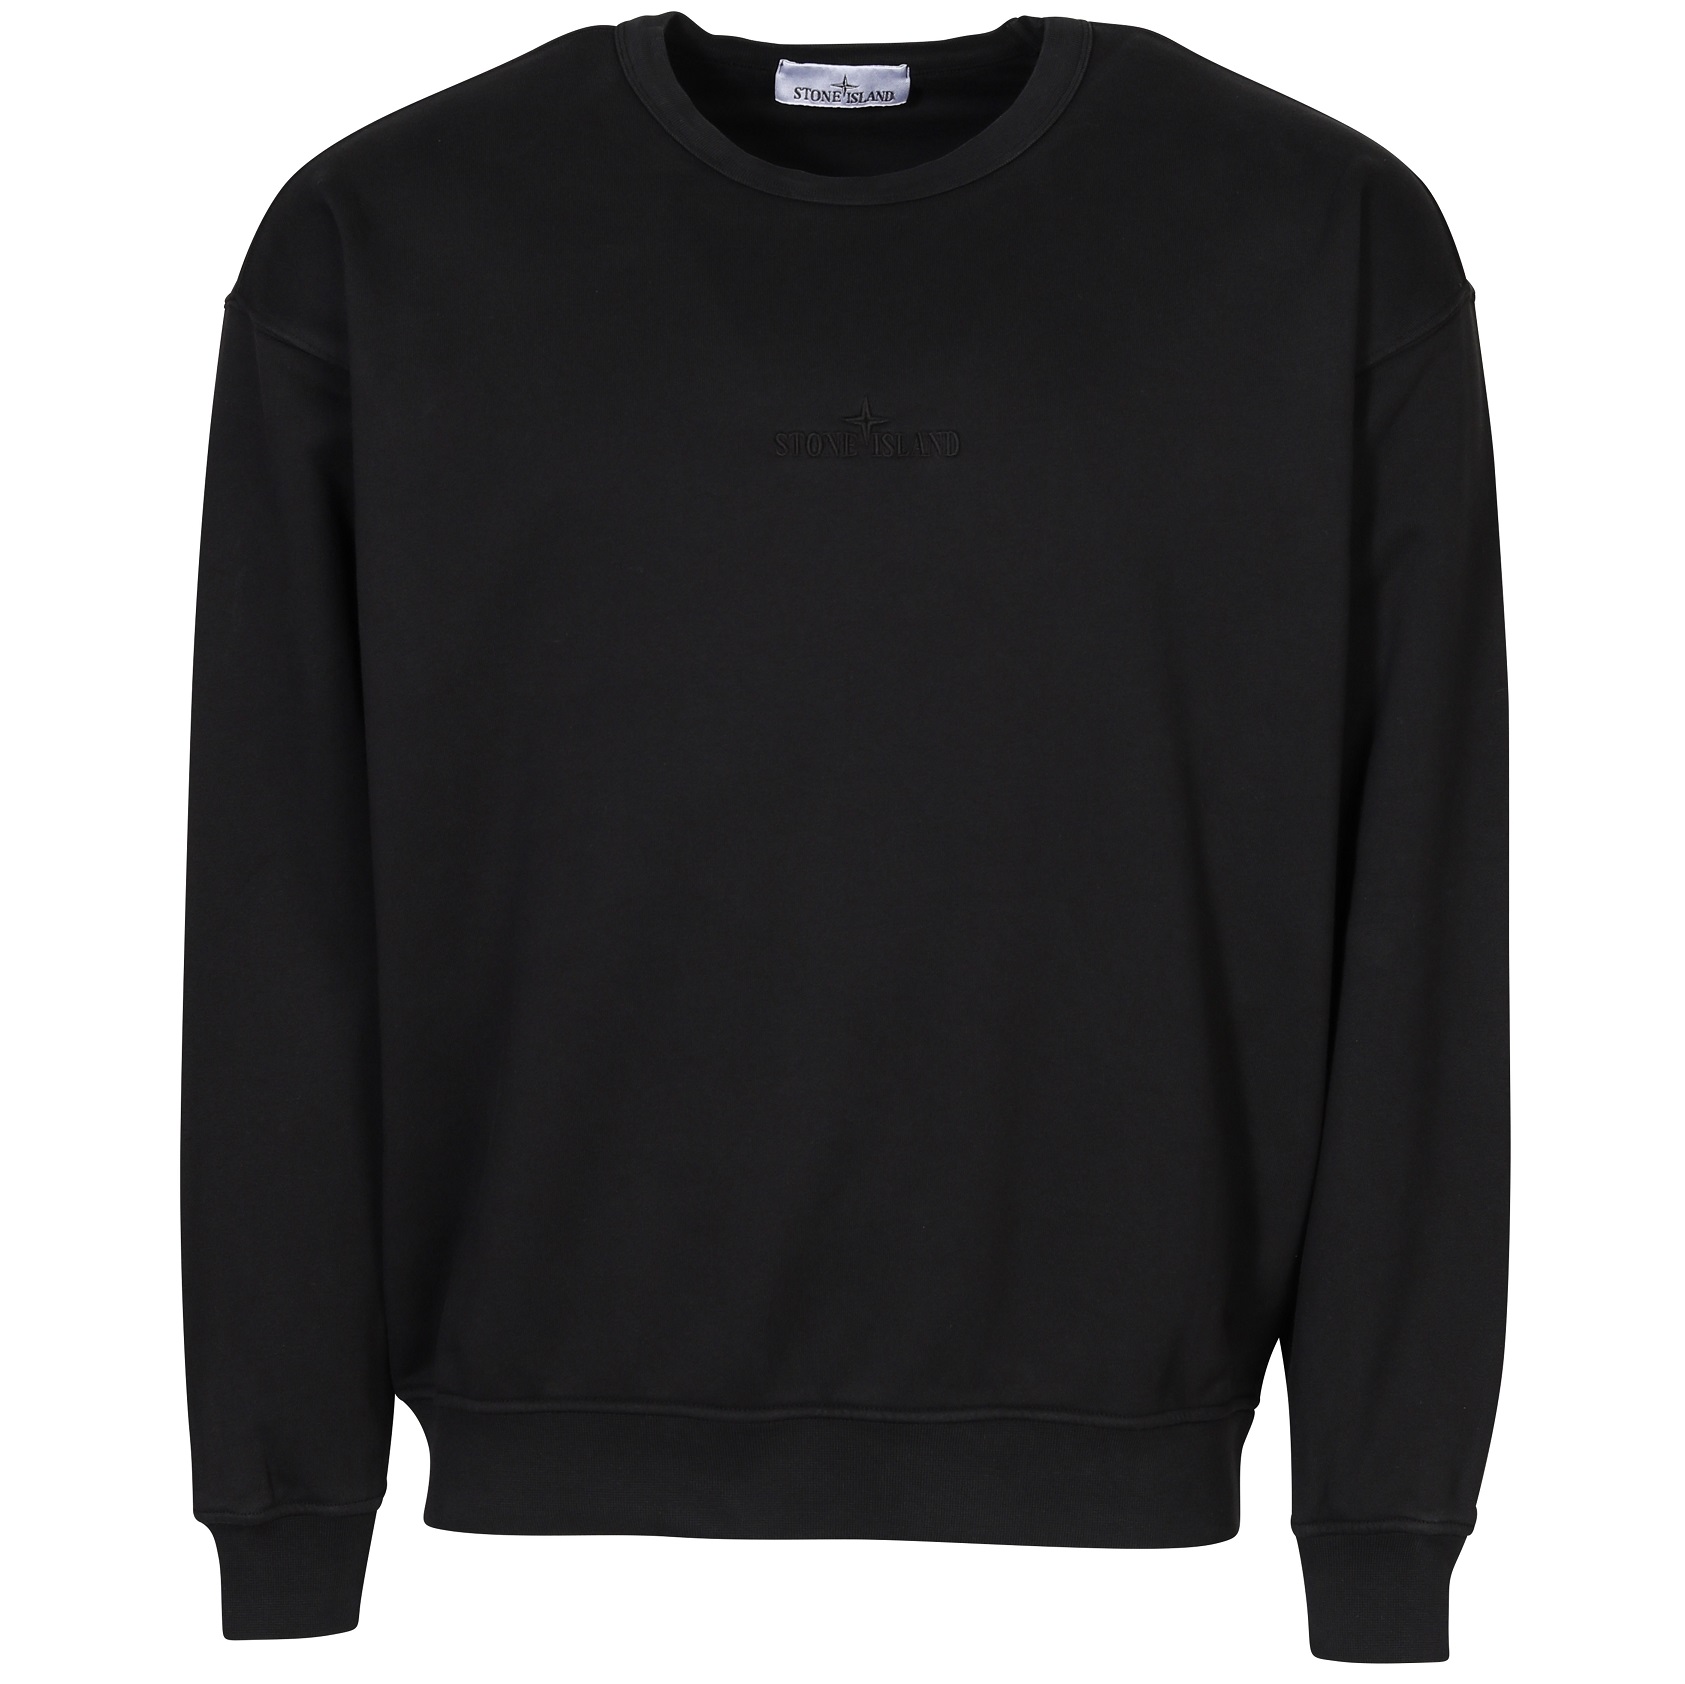 STONE ISLAND Oversize Stamp Sweatshirt in Black 2XL